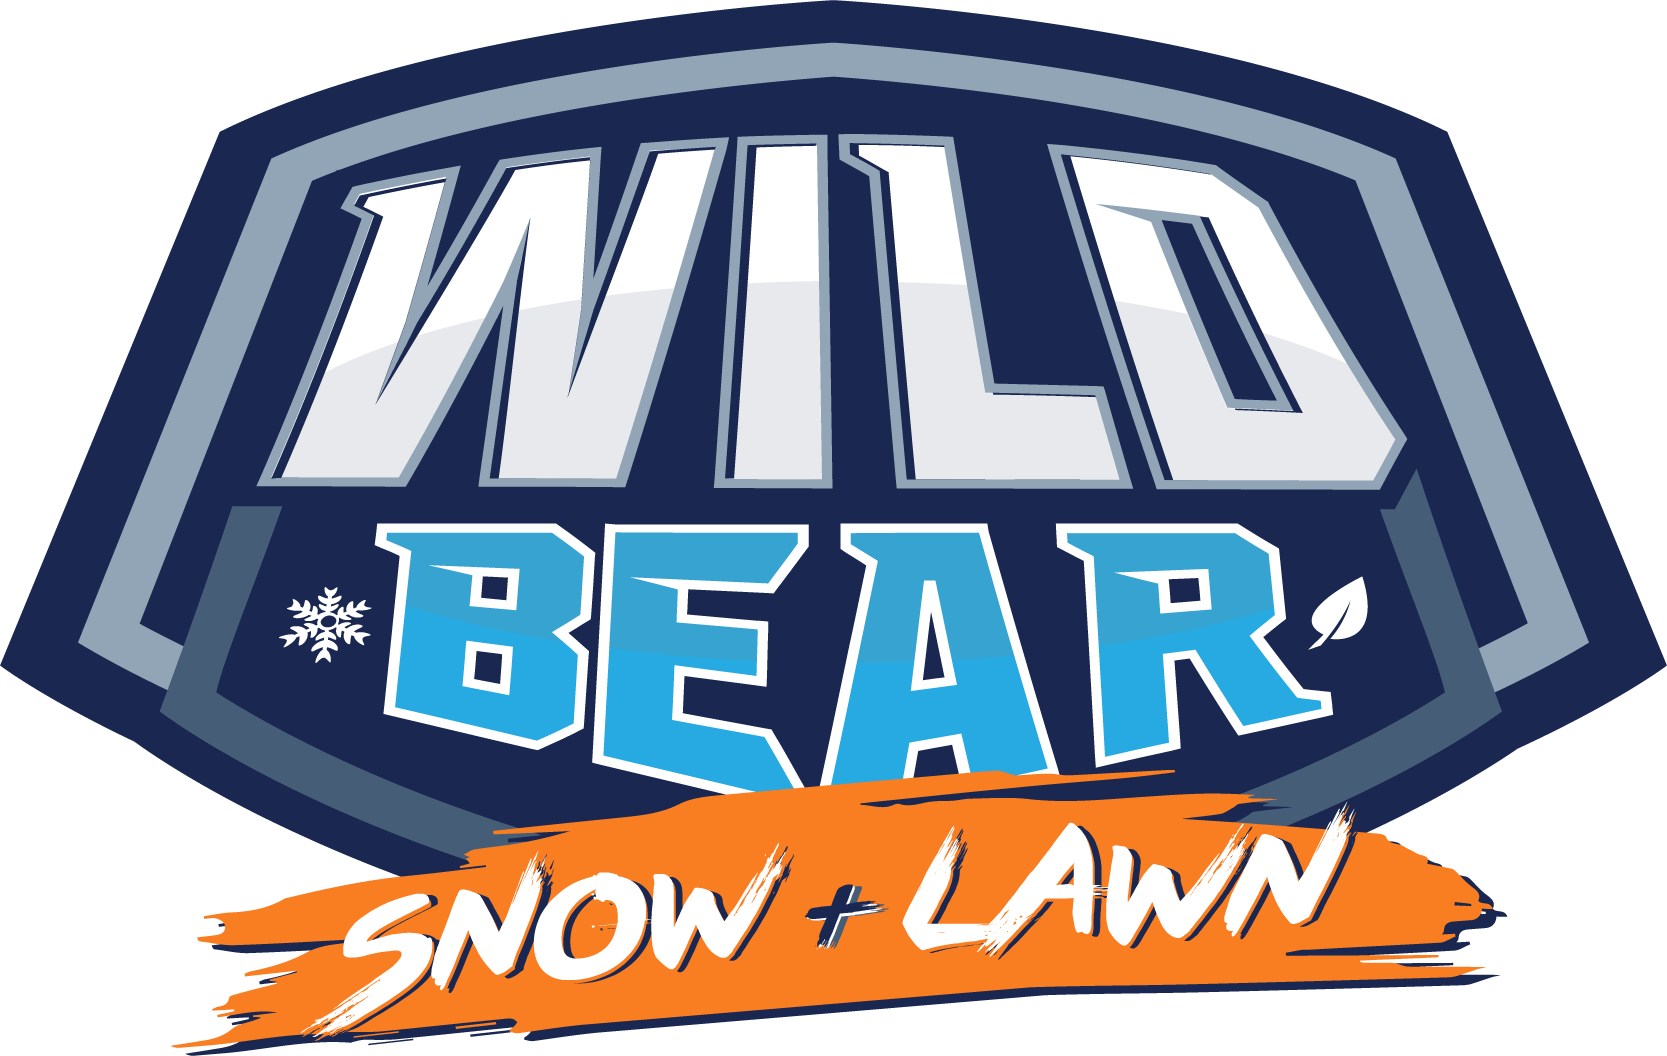 Wild Bear Snow + Lawn Care